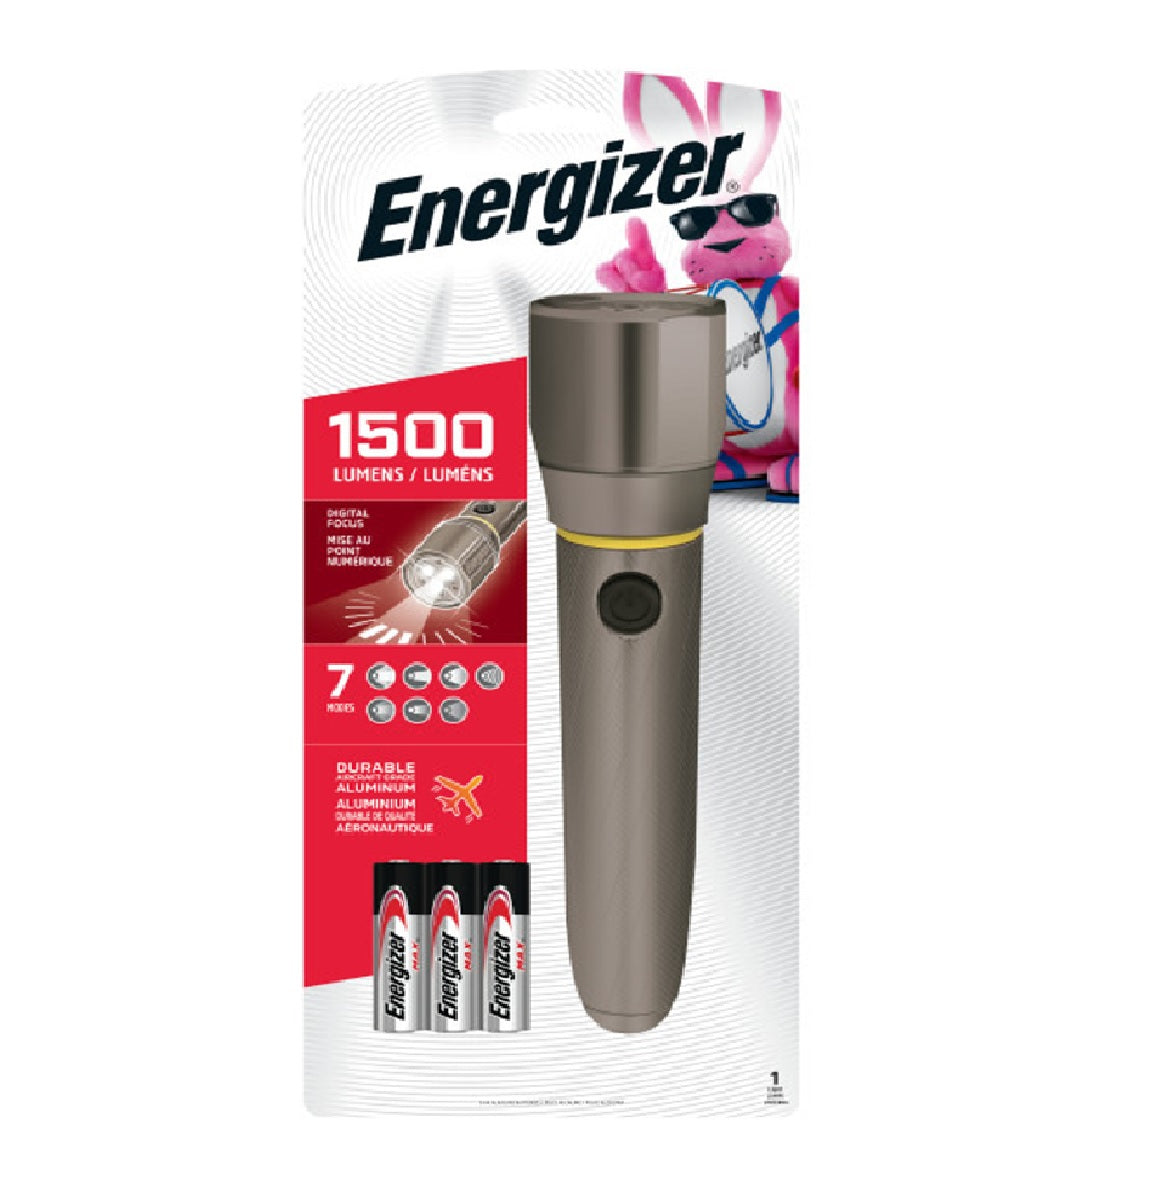 Energizer ENPMZH611 LED Flashlight, Silver